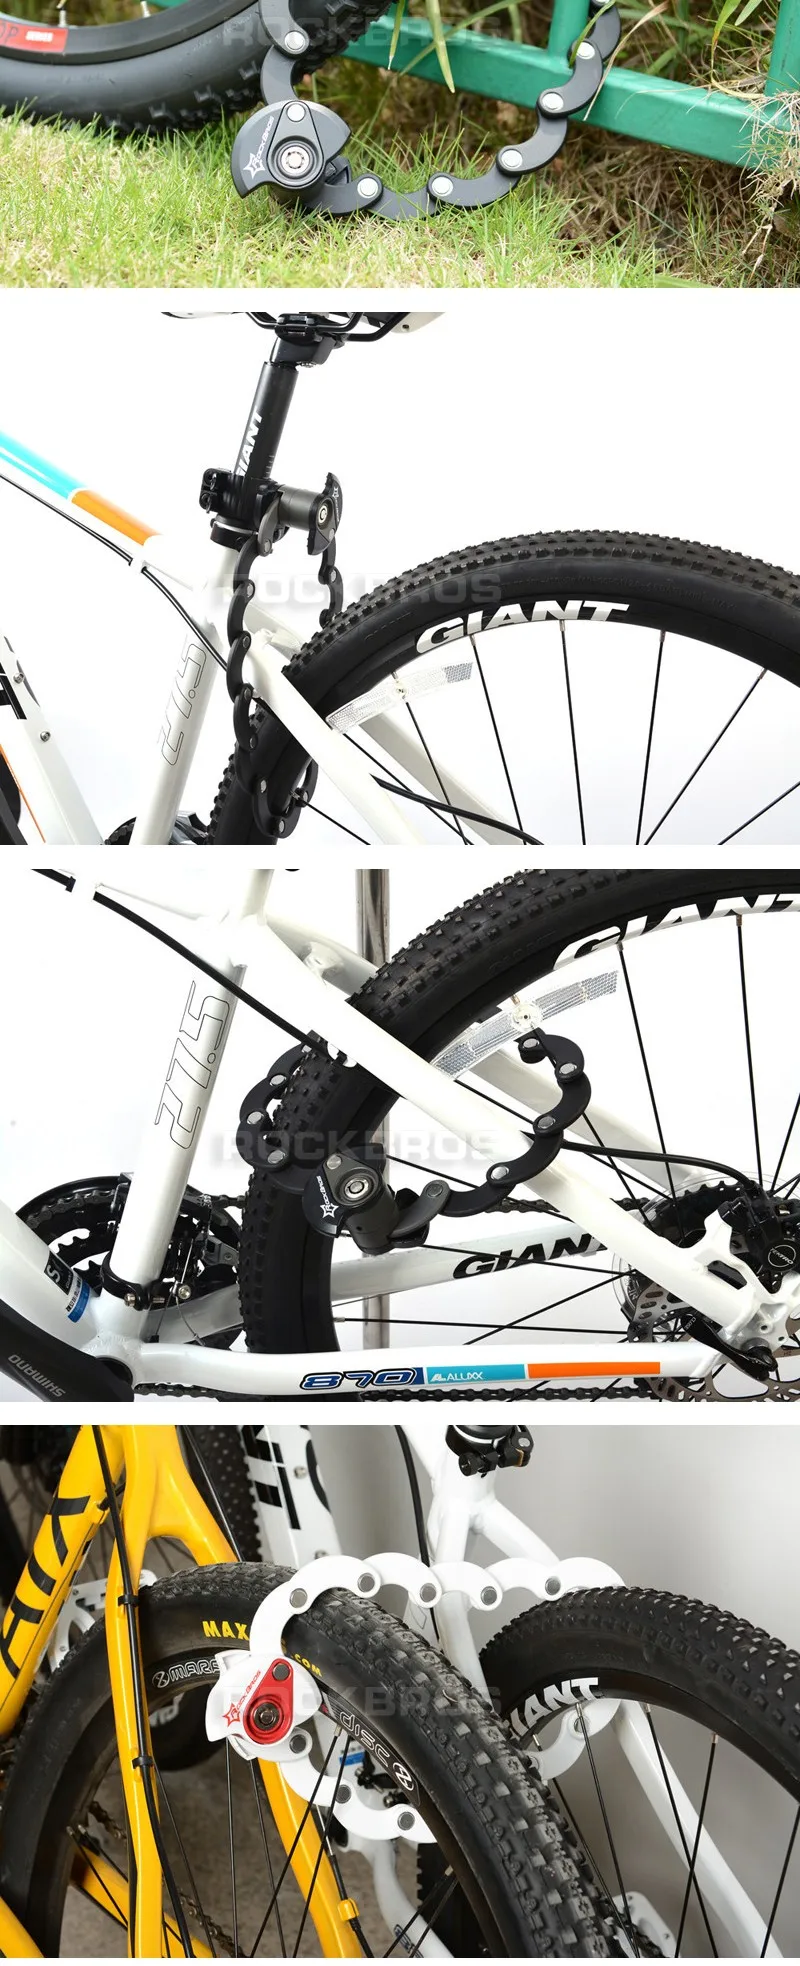 ROCKBROS Bike lock Motorcycle Electric Bicycle High Security & Drill Resistant Lock Cylinder Lock